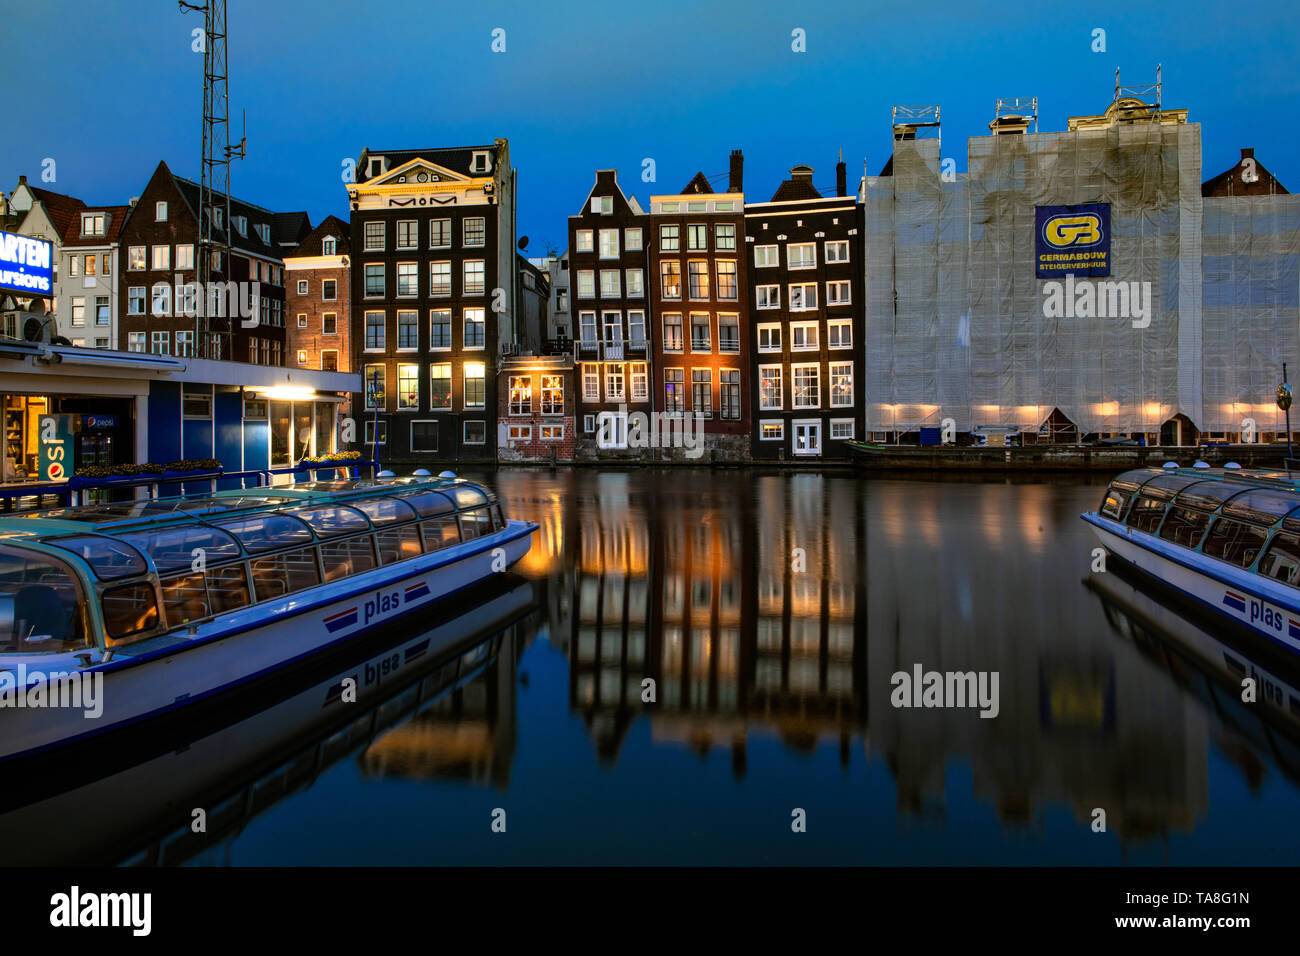 Damrak canal case durante la notte - Amsterdam canal house riflessione case di ballo di Damrak riflessioni a notte - case riflettente damrak canal Foto Stock